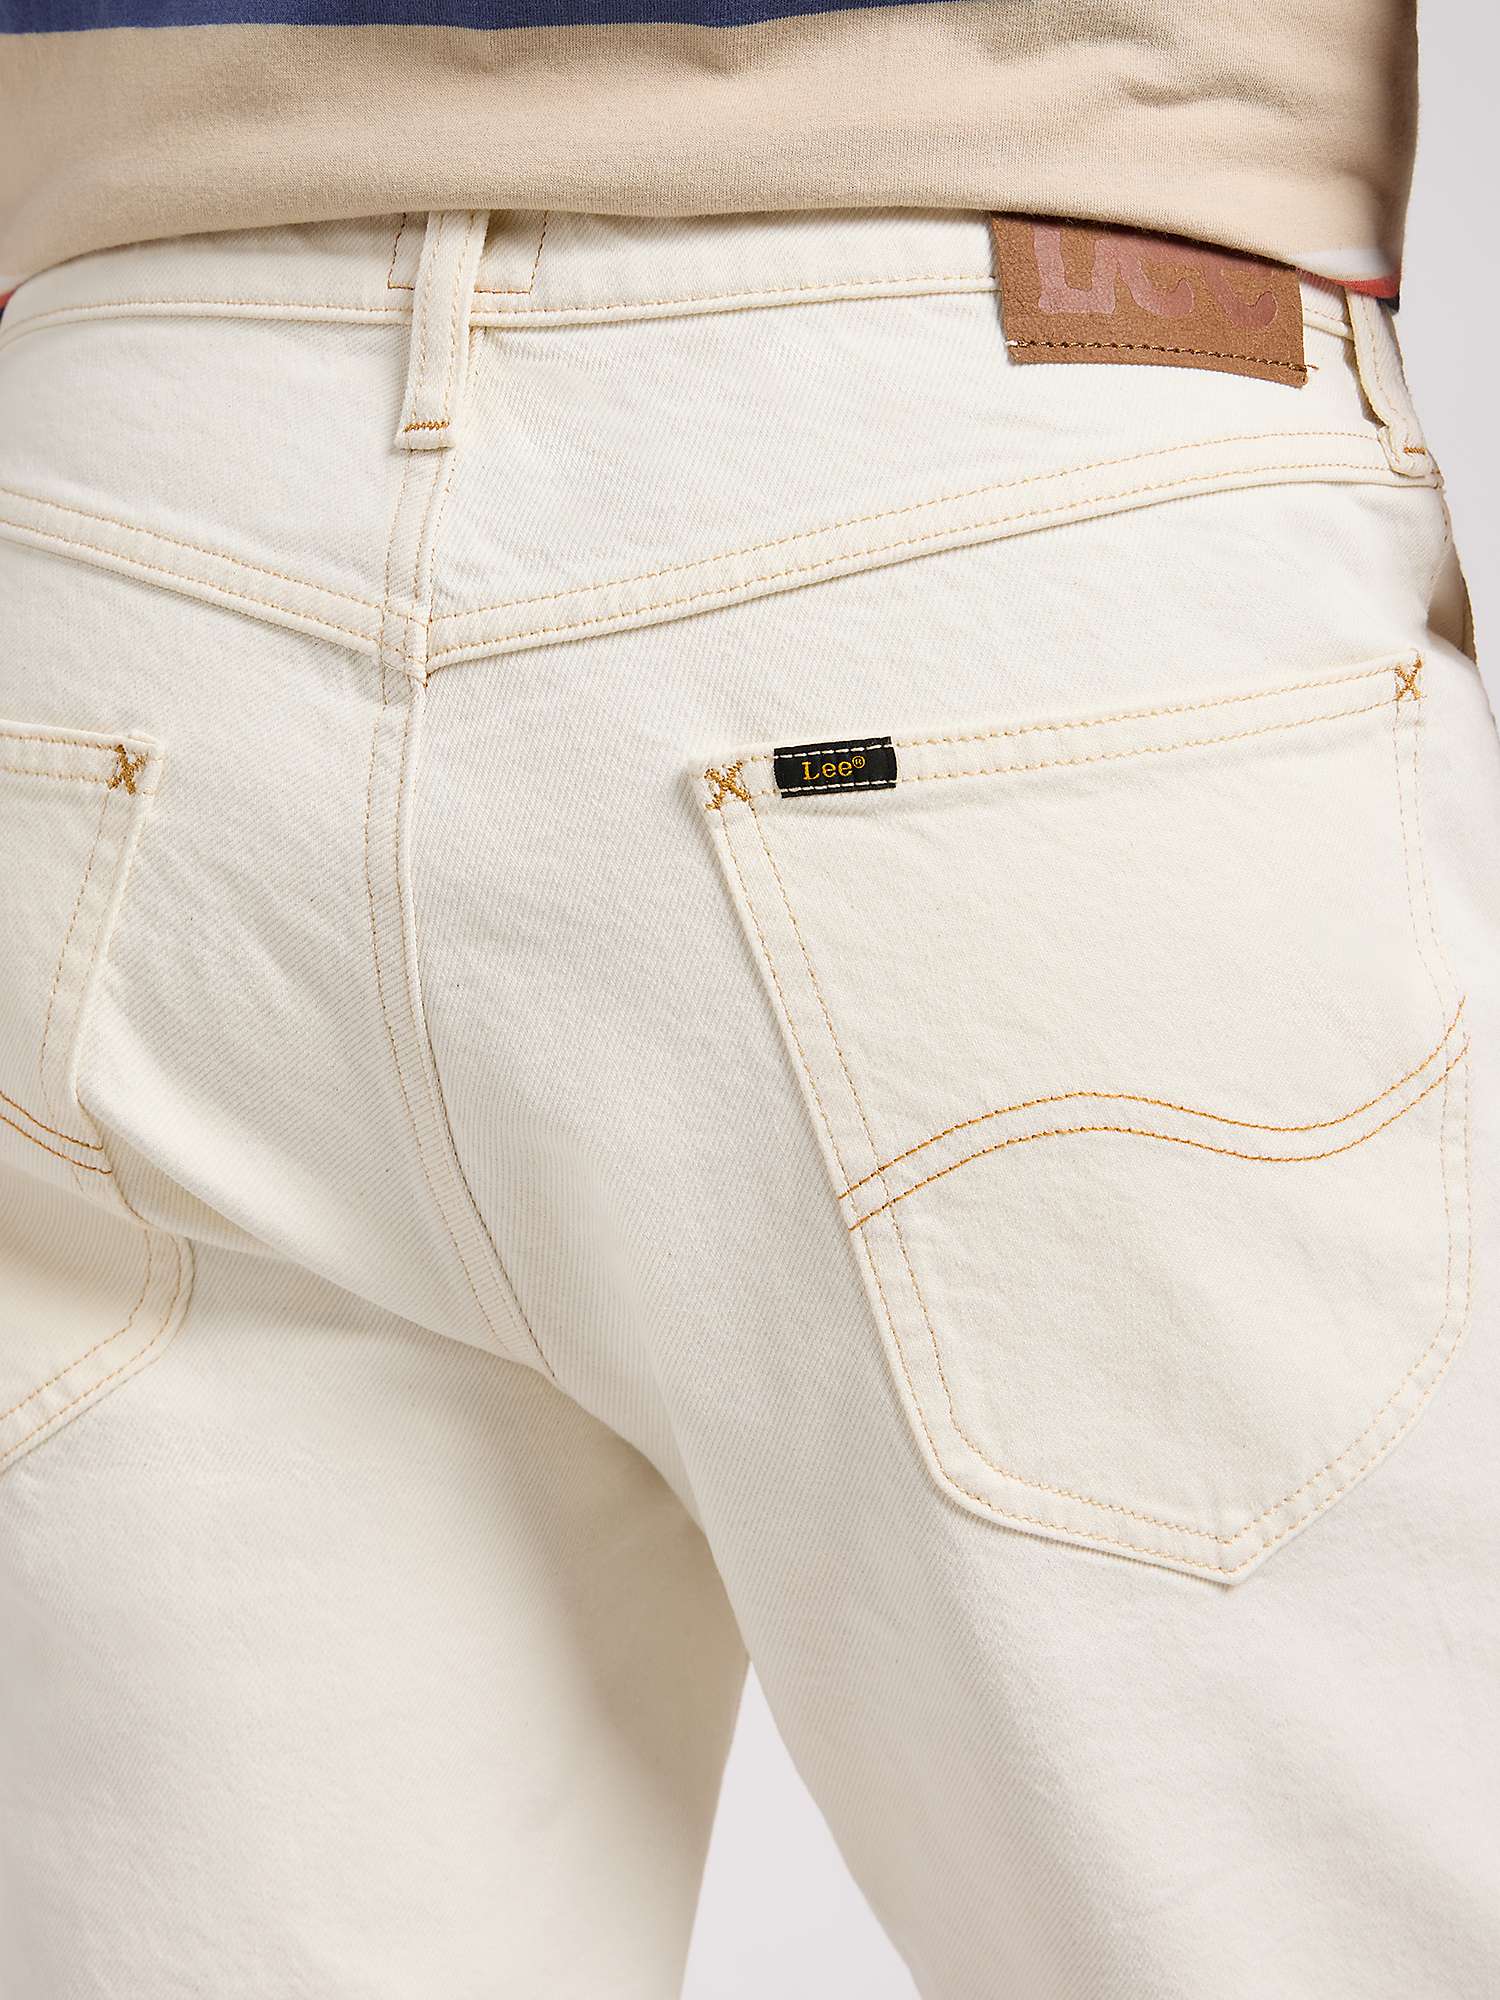 Buy Lee 5 Pocket Contrast Stitch Denim Shorts, Clean White Online at johnlewis.com